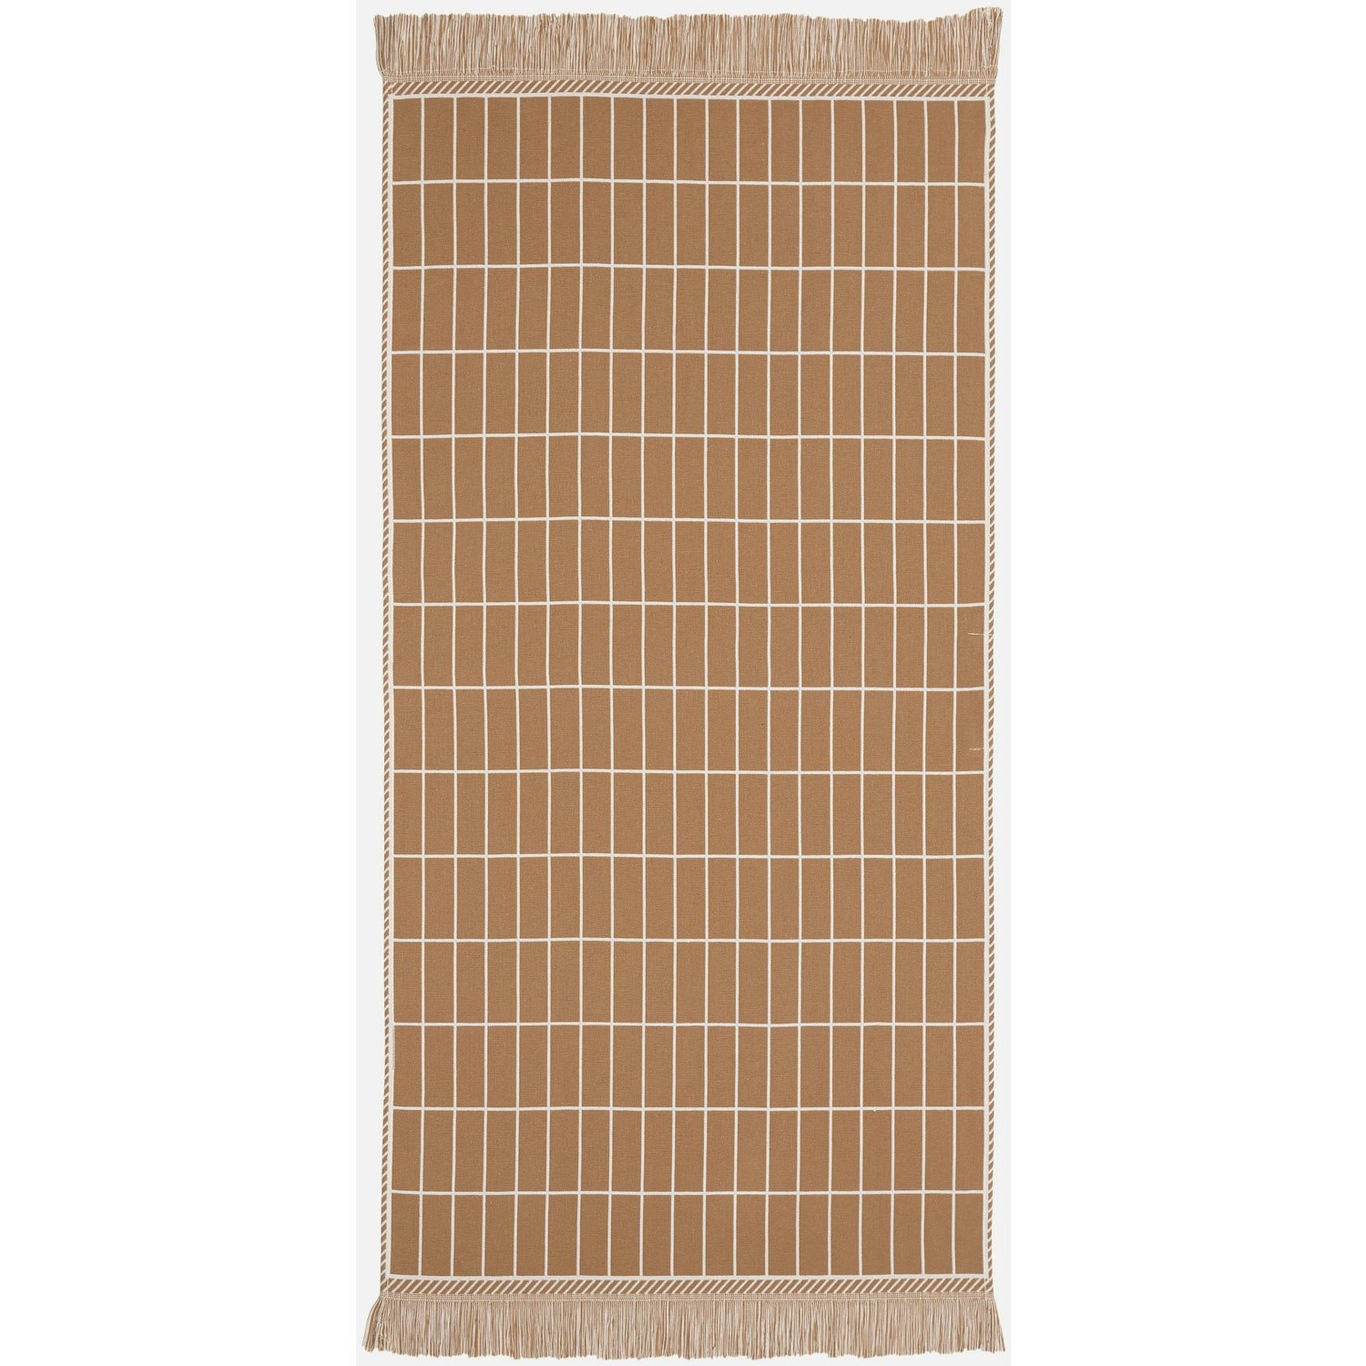 Pieni Tiiliskivi Towel Hamam Brown / Off-white, 50x100 cm